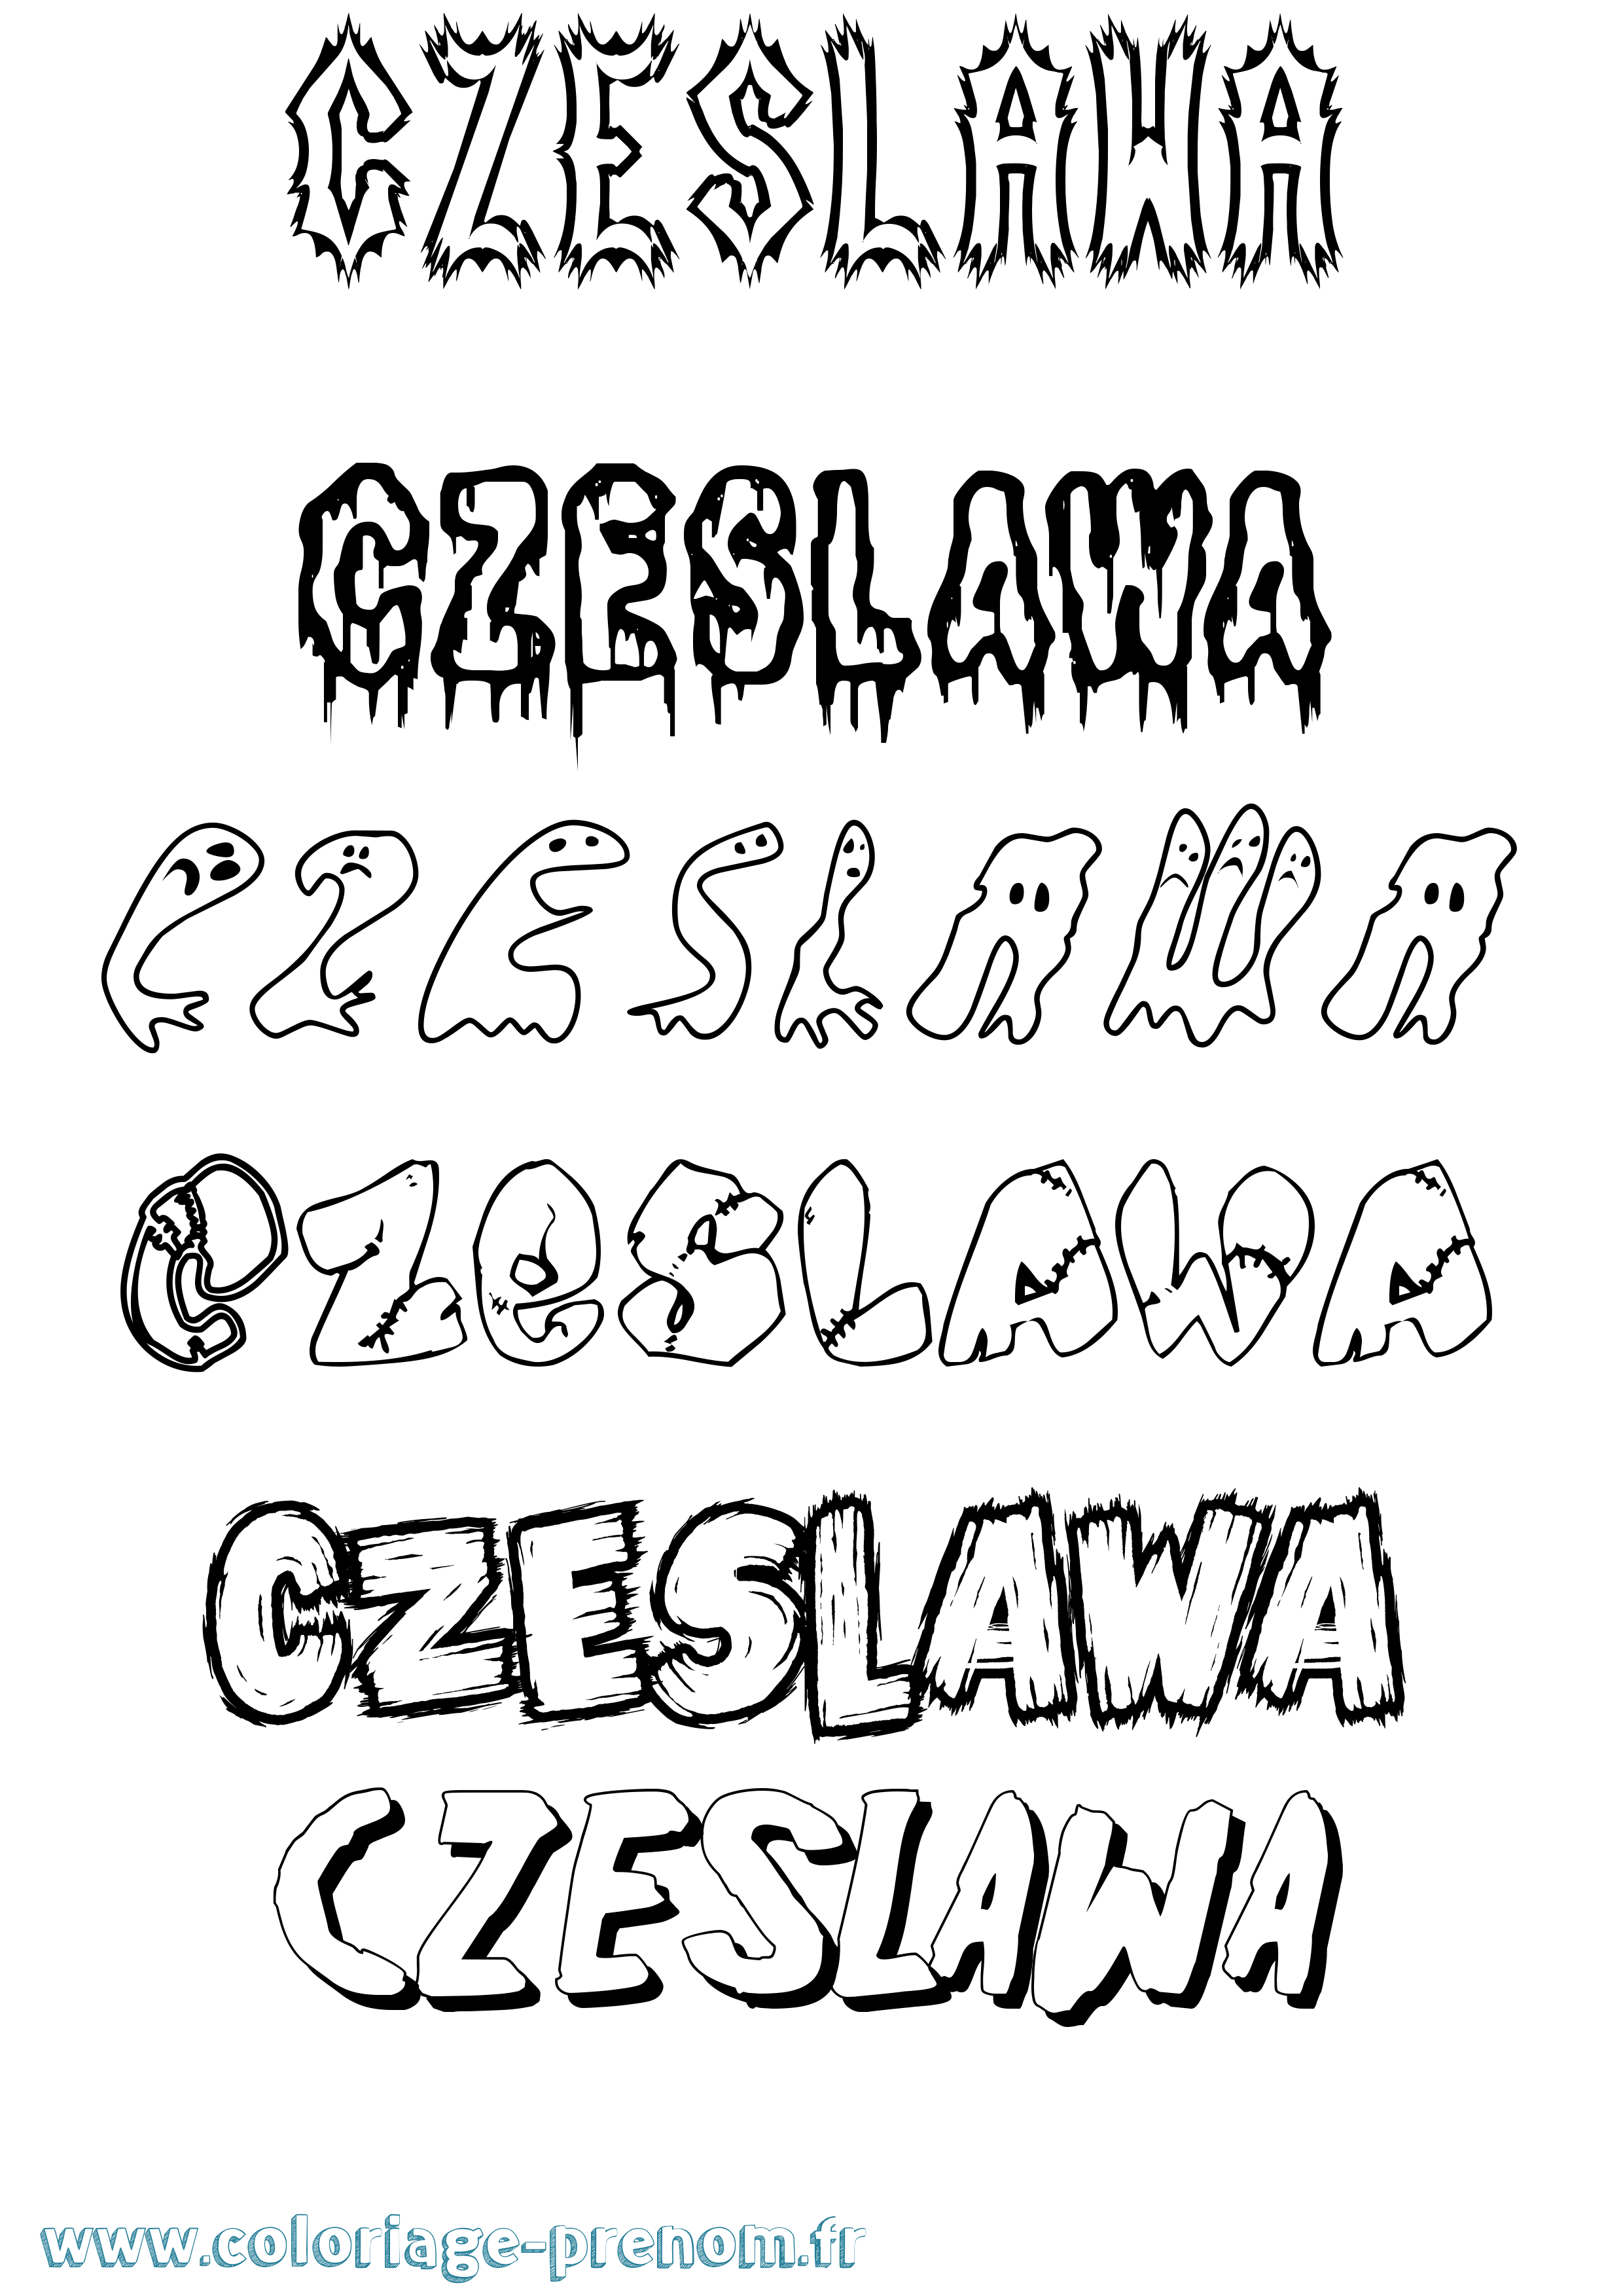 Coloriage prénom Czeslawa Frisson